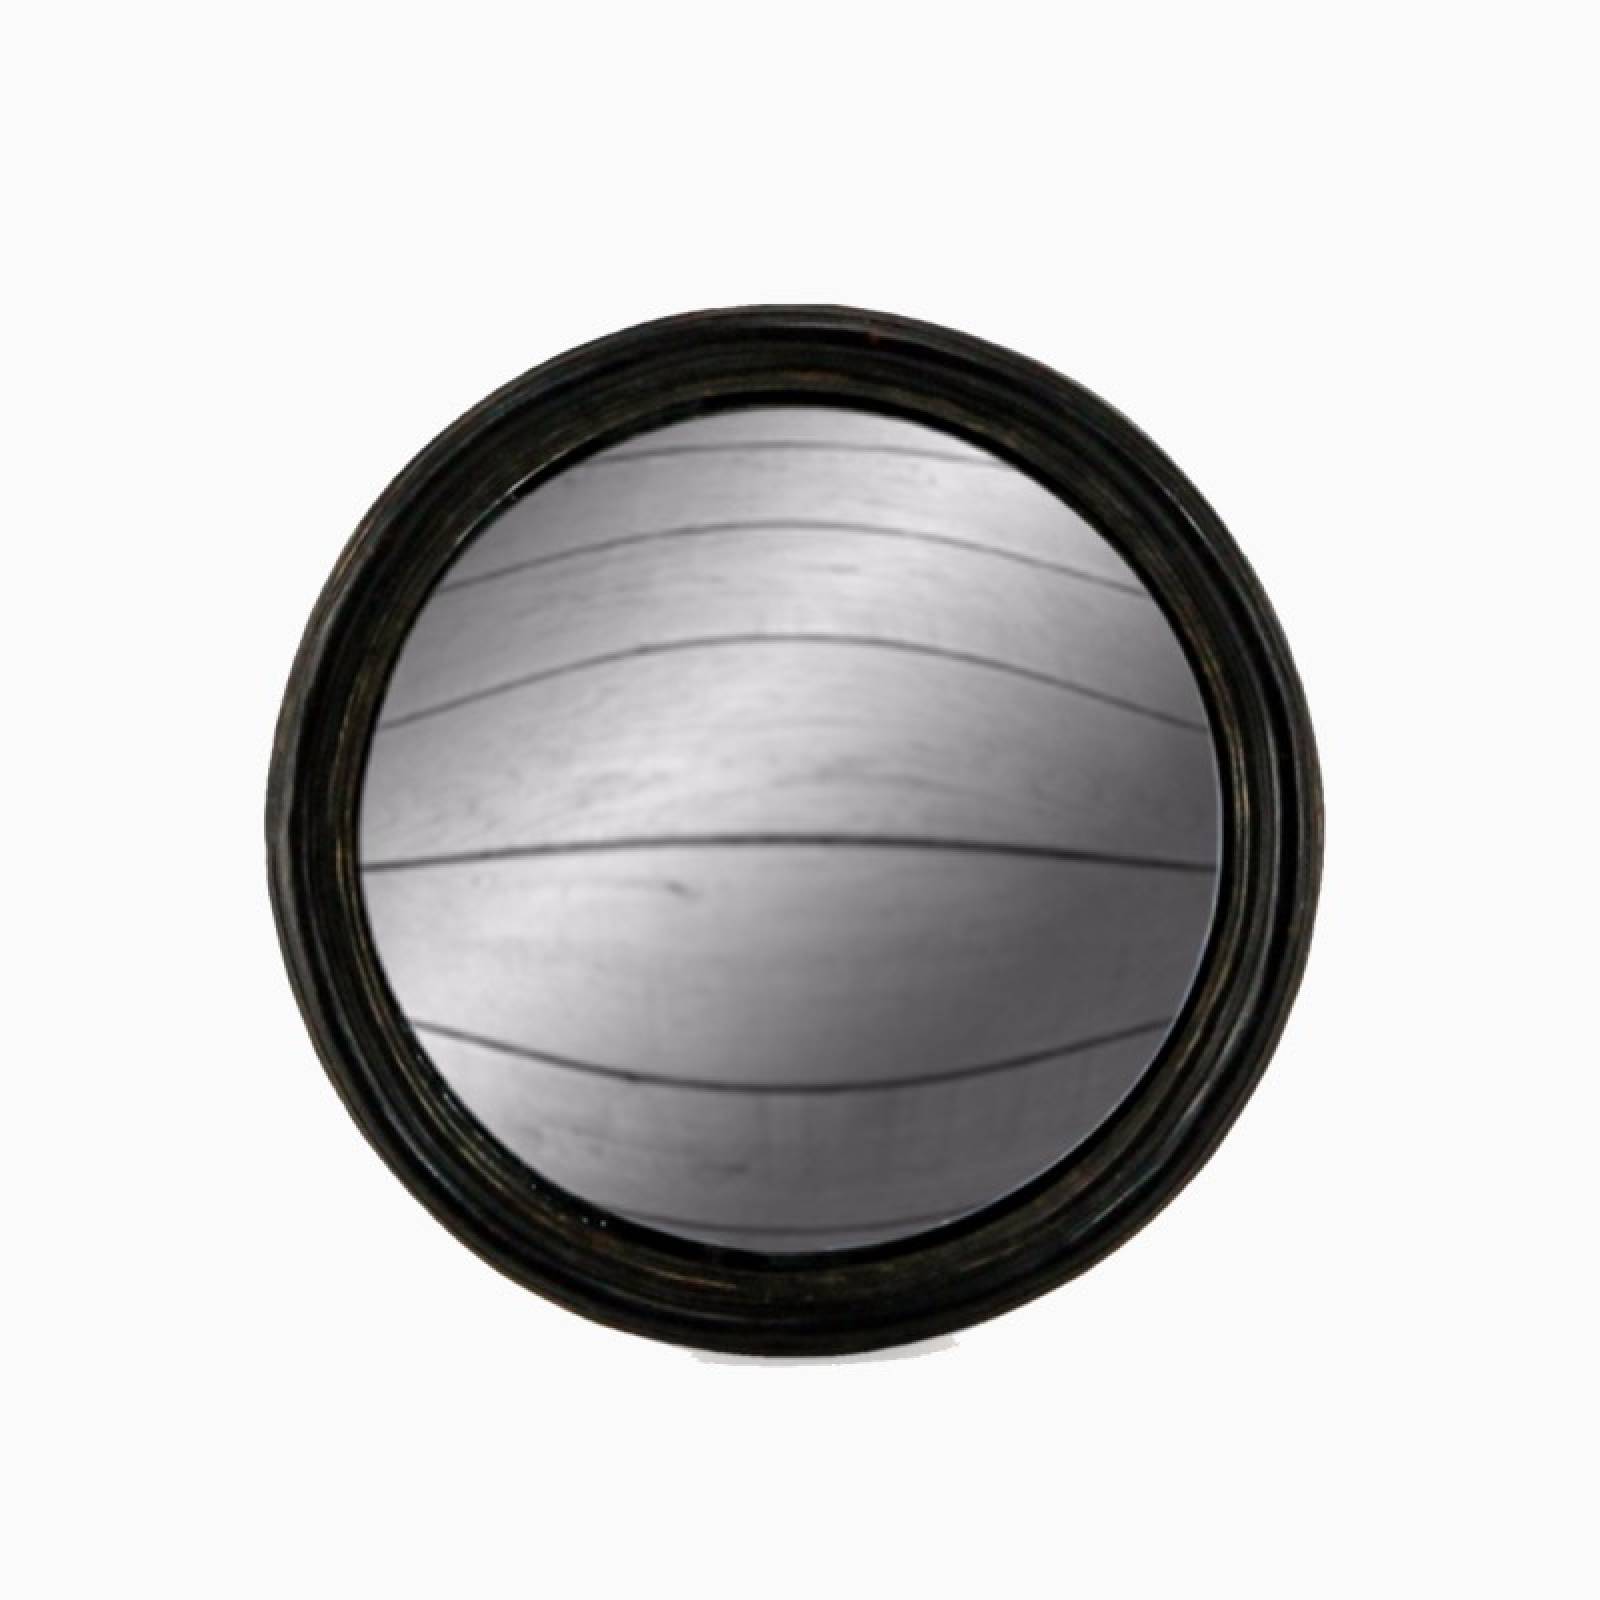 Antiqued Black Thin Framed Medium Convex Mirror D: 17cm